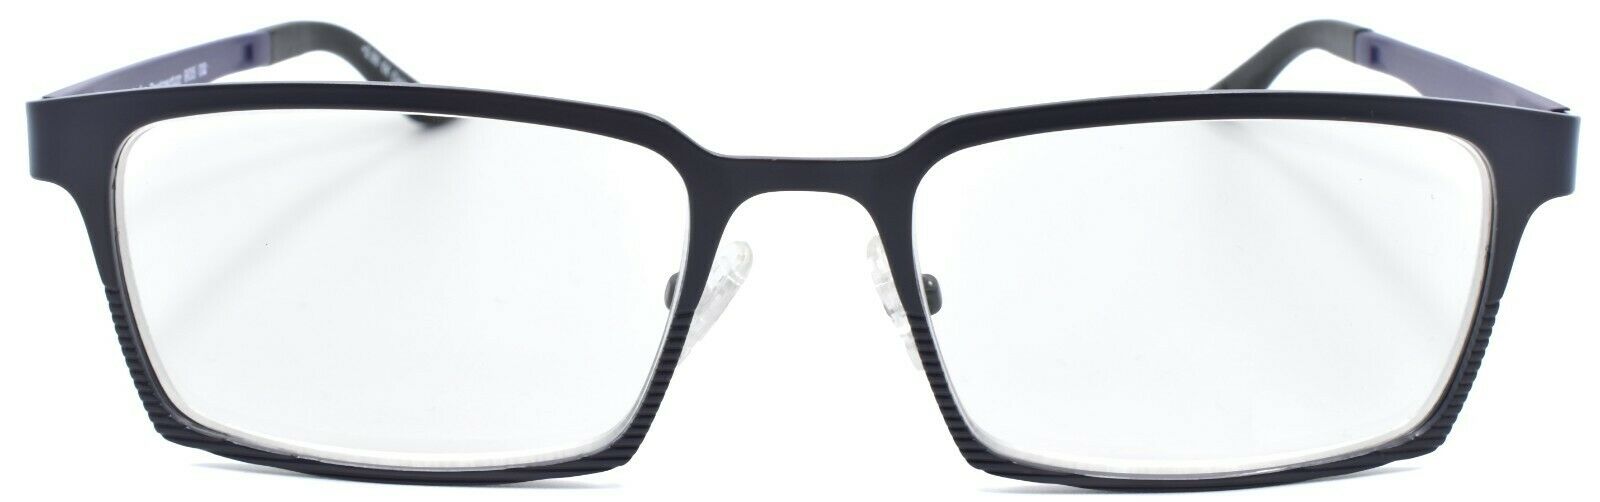 2-Eyebobs Protractor 905 02 Reading Glasses Gunmetal / Blue +2.00-842446045074-IKSpecs